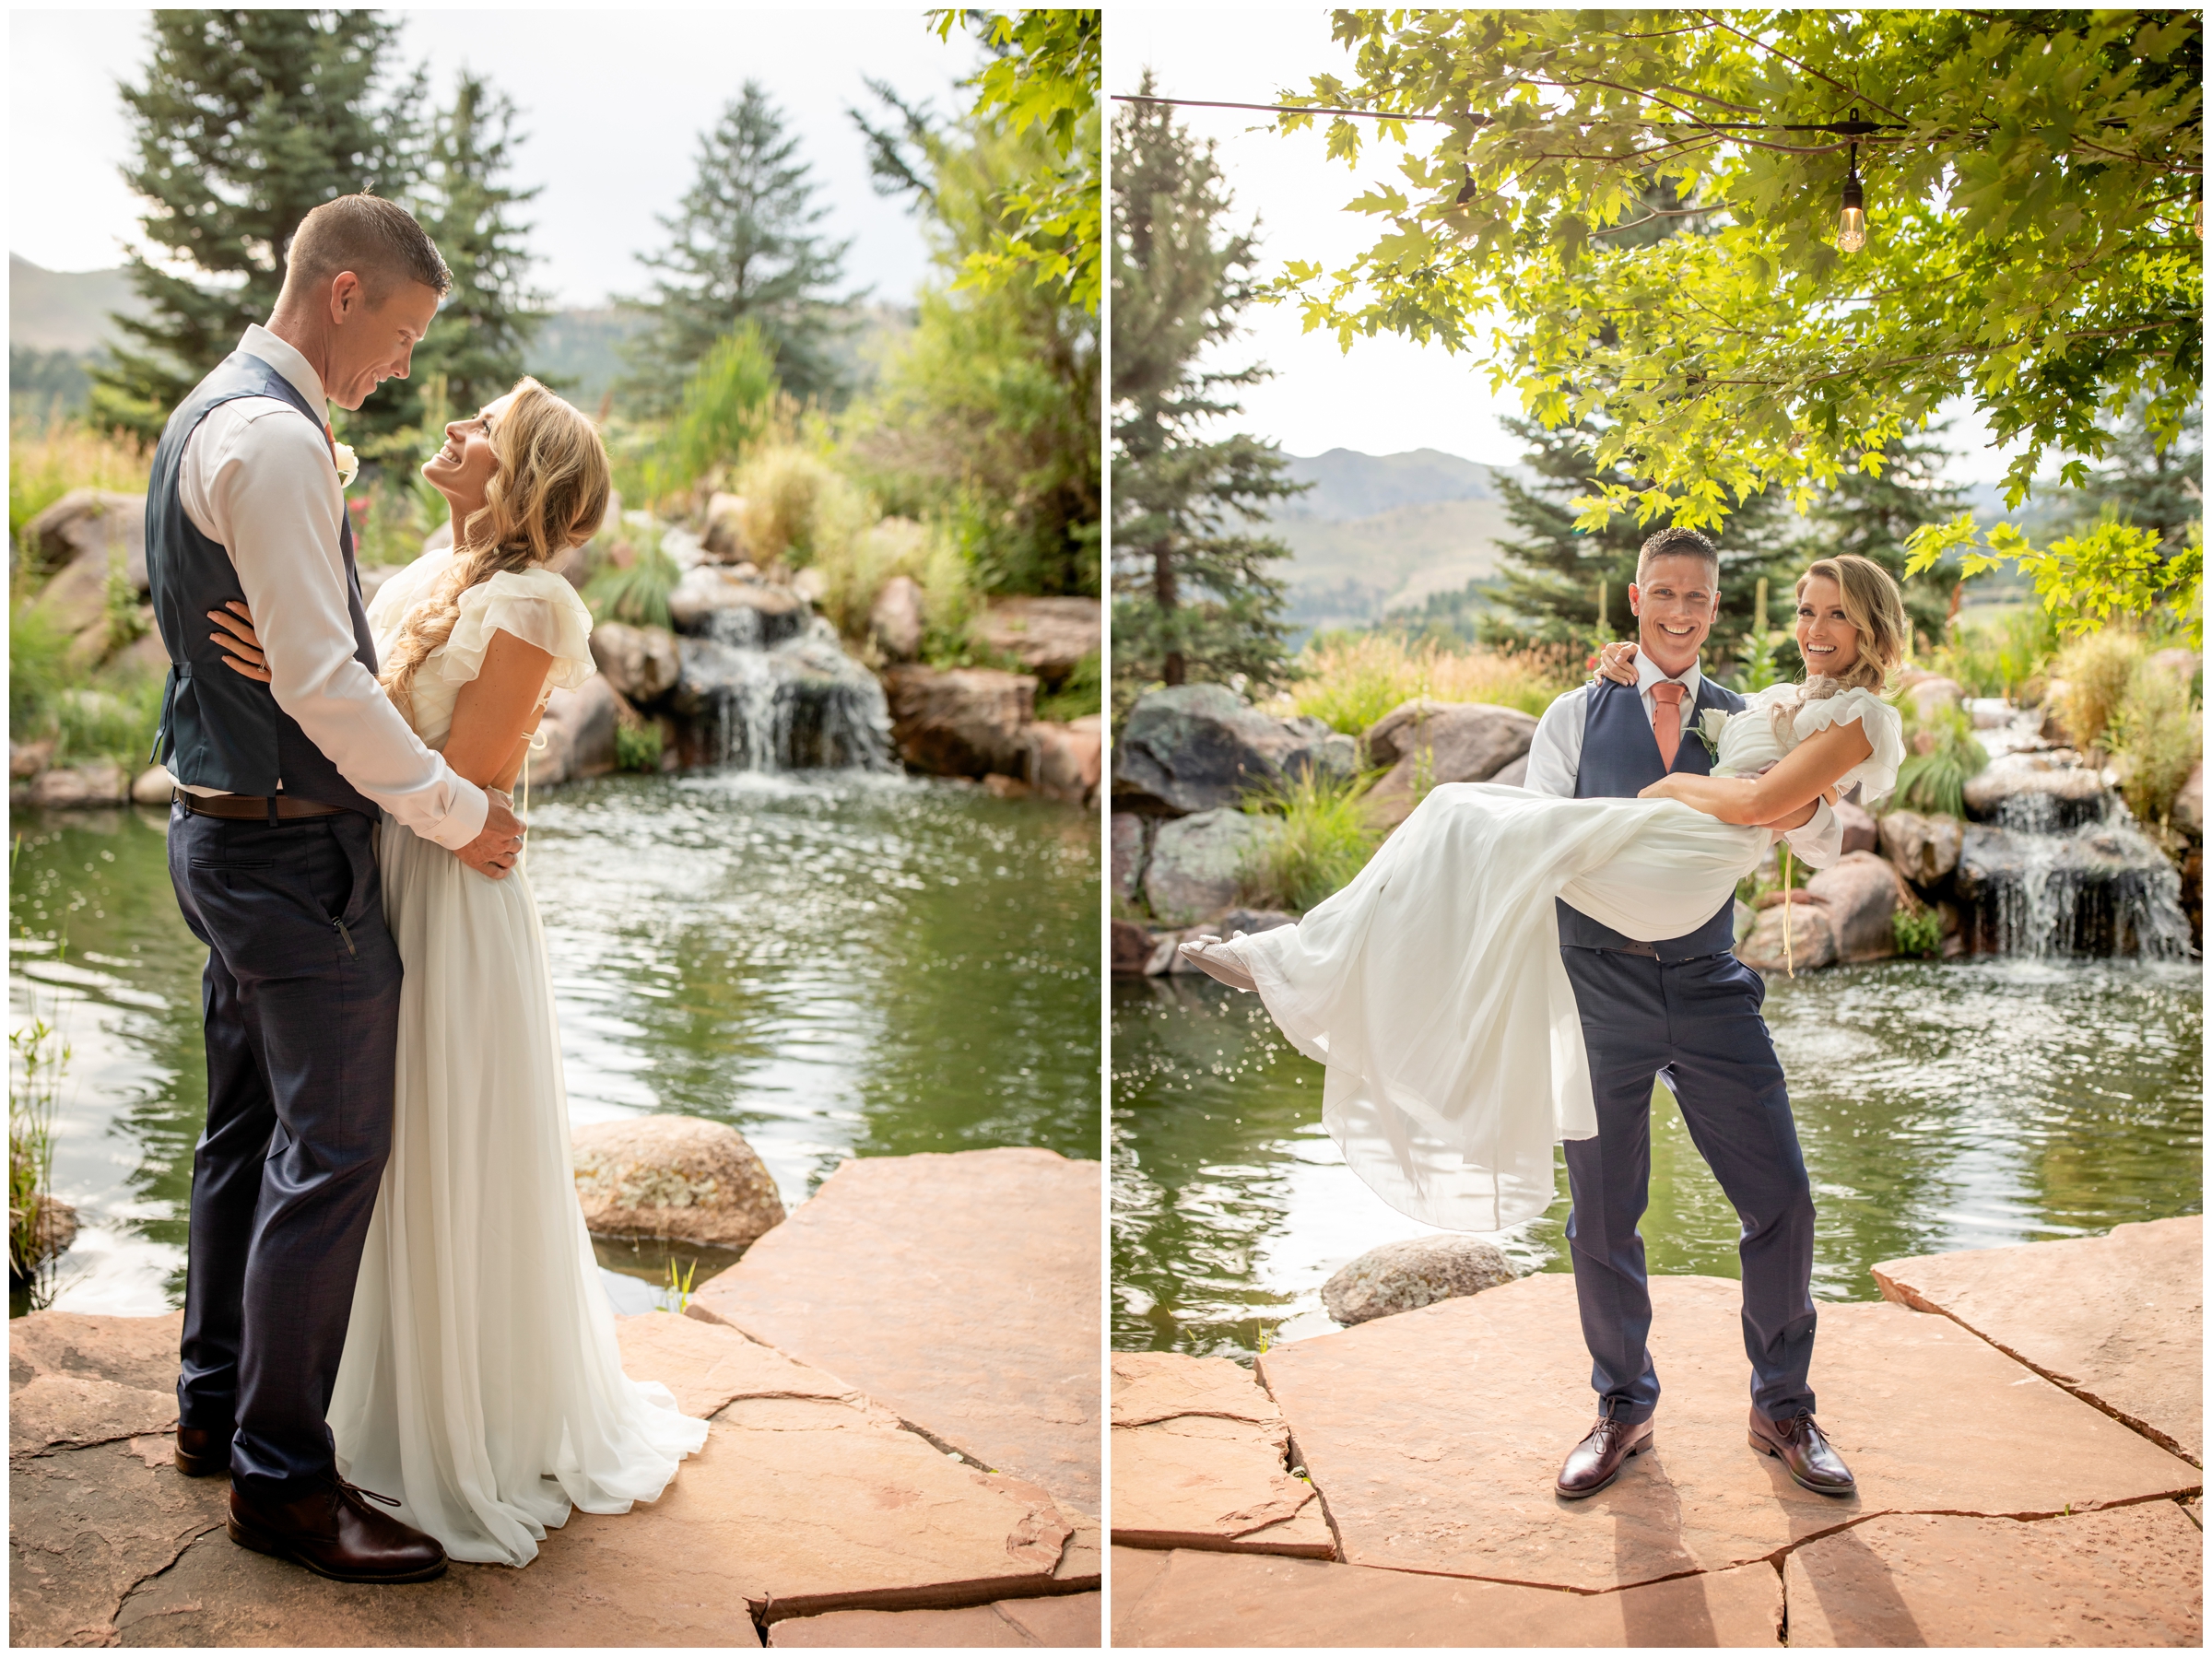 groom lifting bride in front of pond during Greenbriar Inn Boulder Colorado wedding portraits 